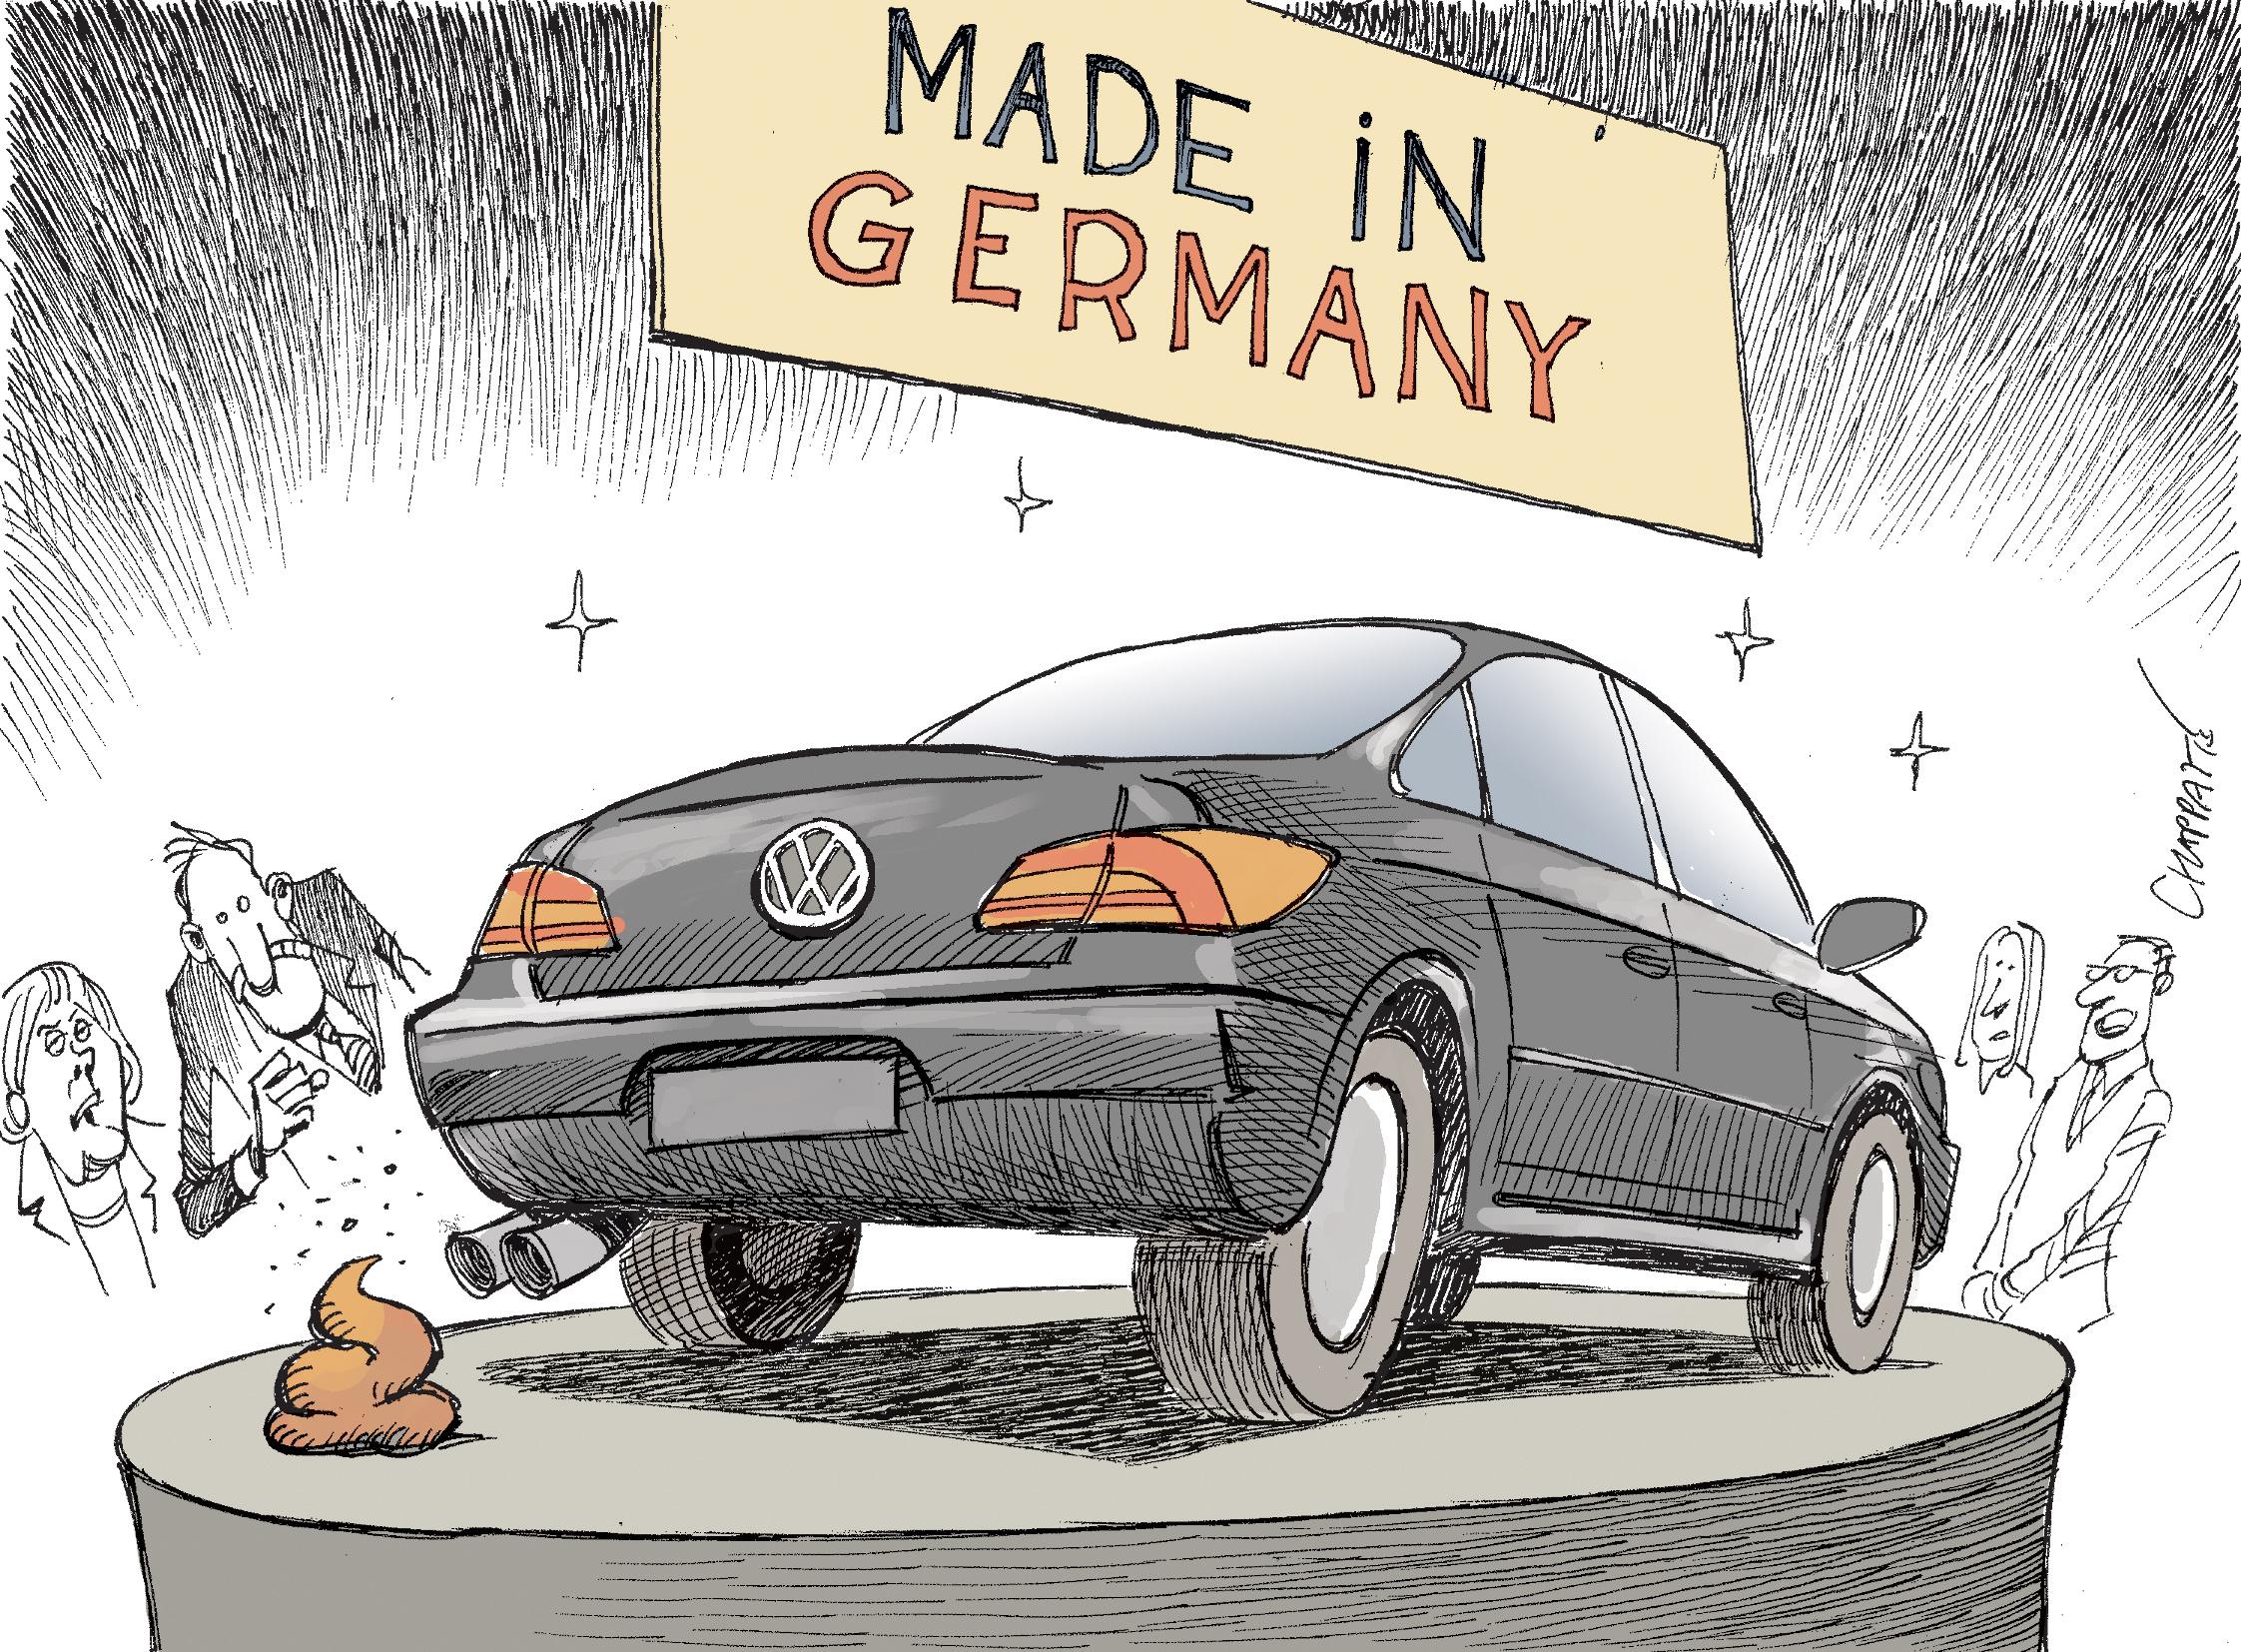 Damage to Germany's reputation